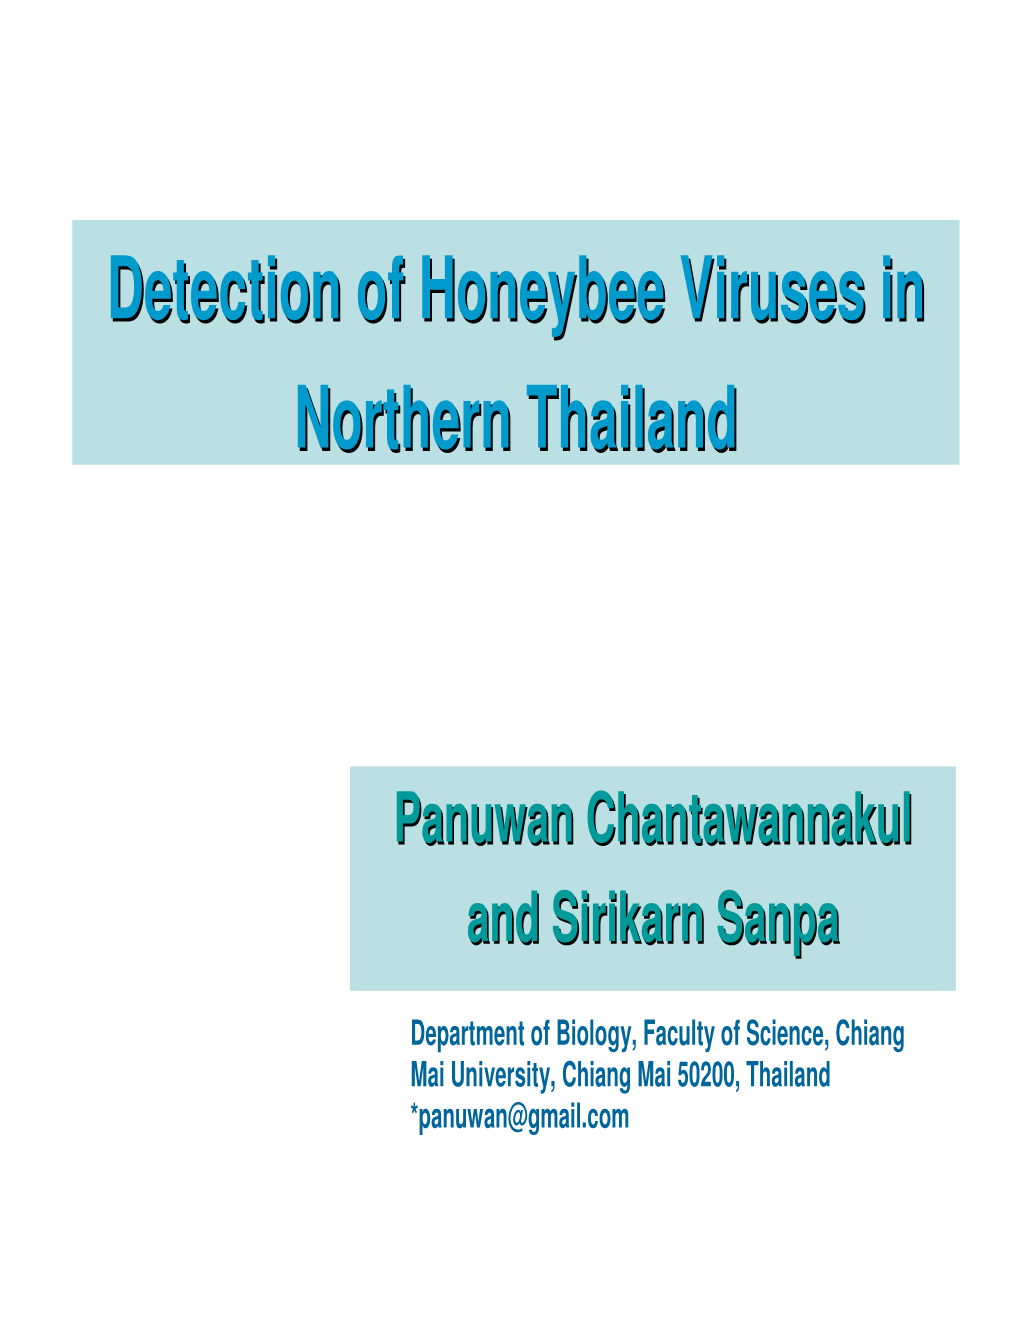 Detection of Honeybee Viruses in Northern Thailand